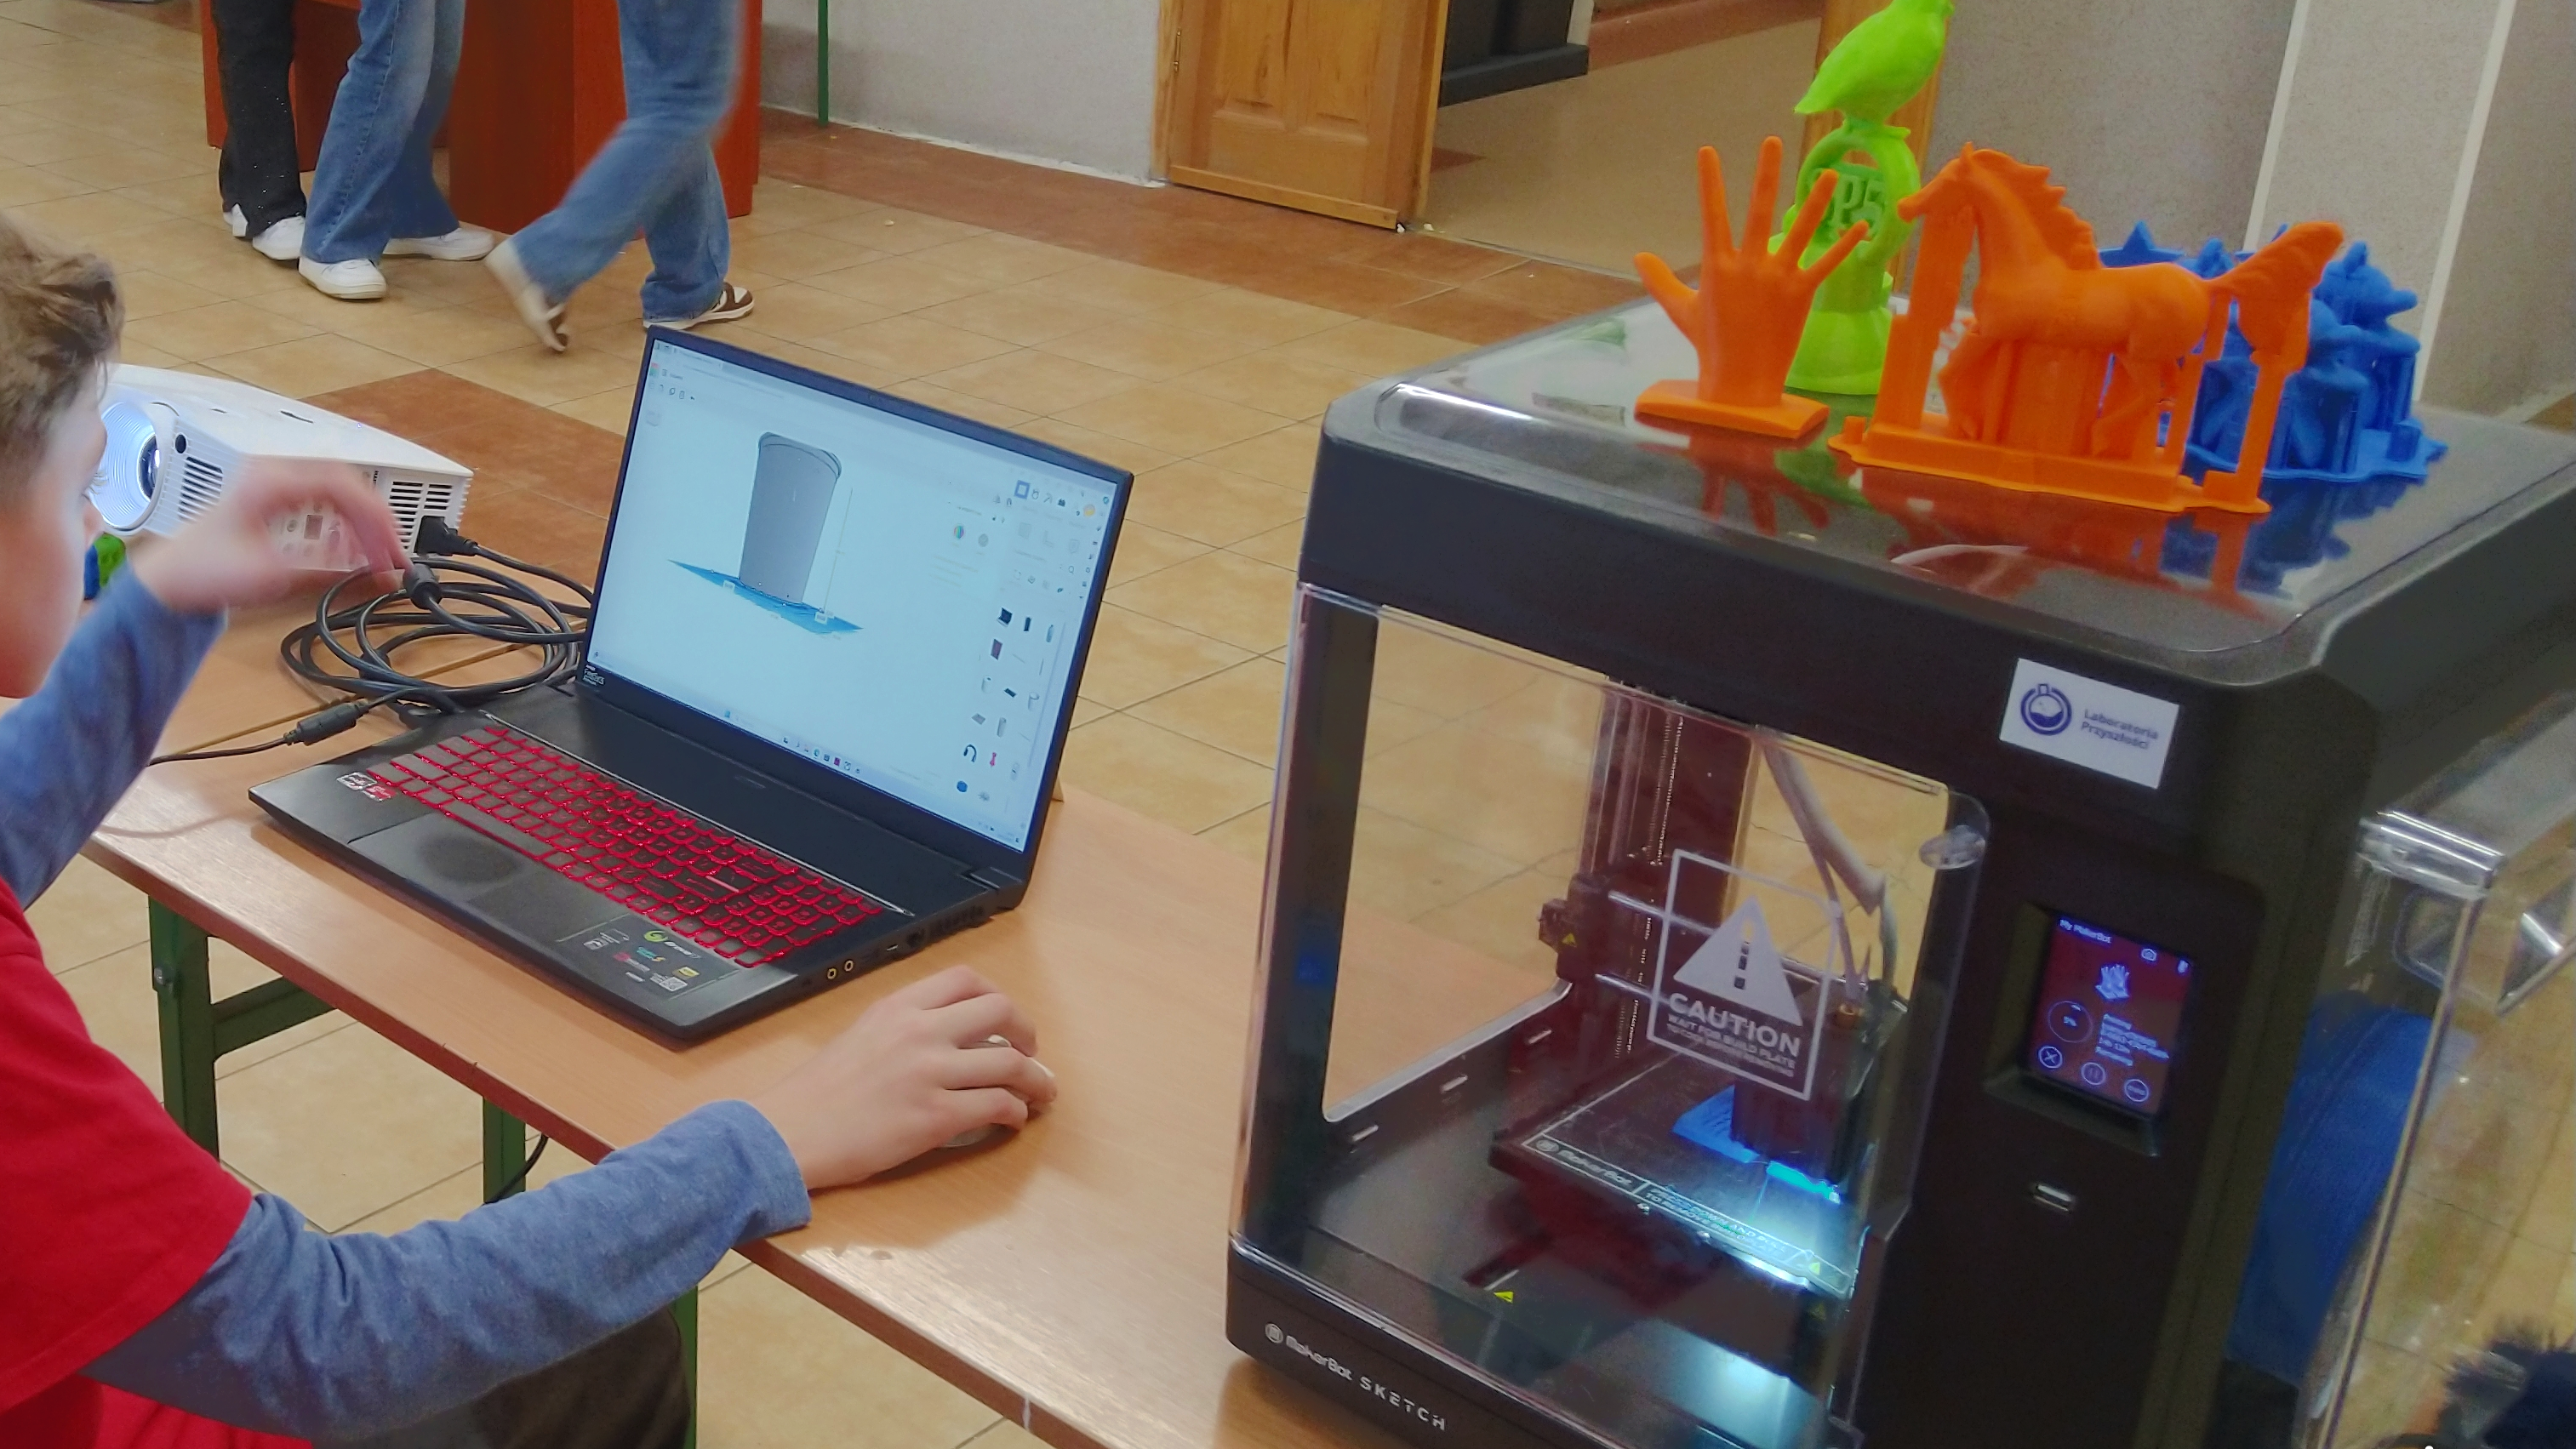 Uczeń na laptopie wykonuje projekt 3D